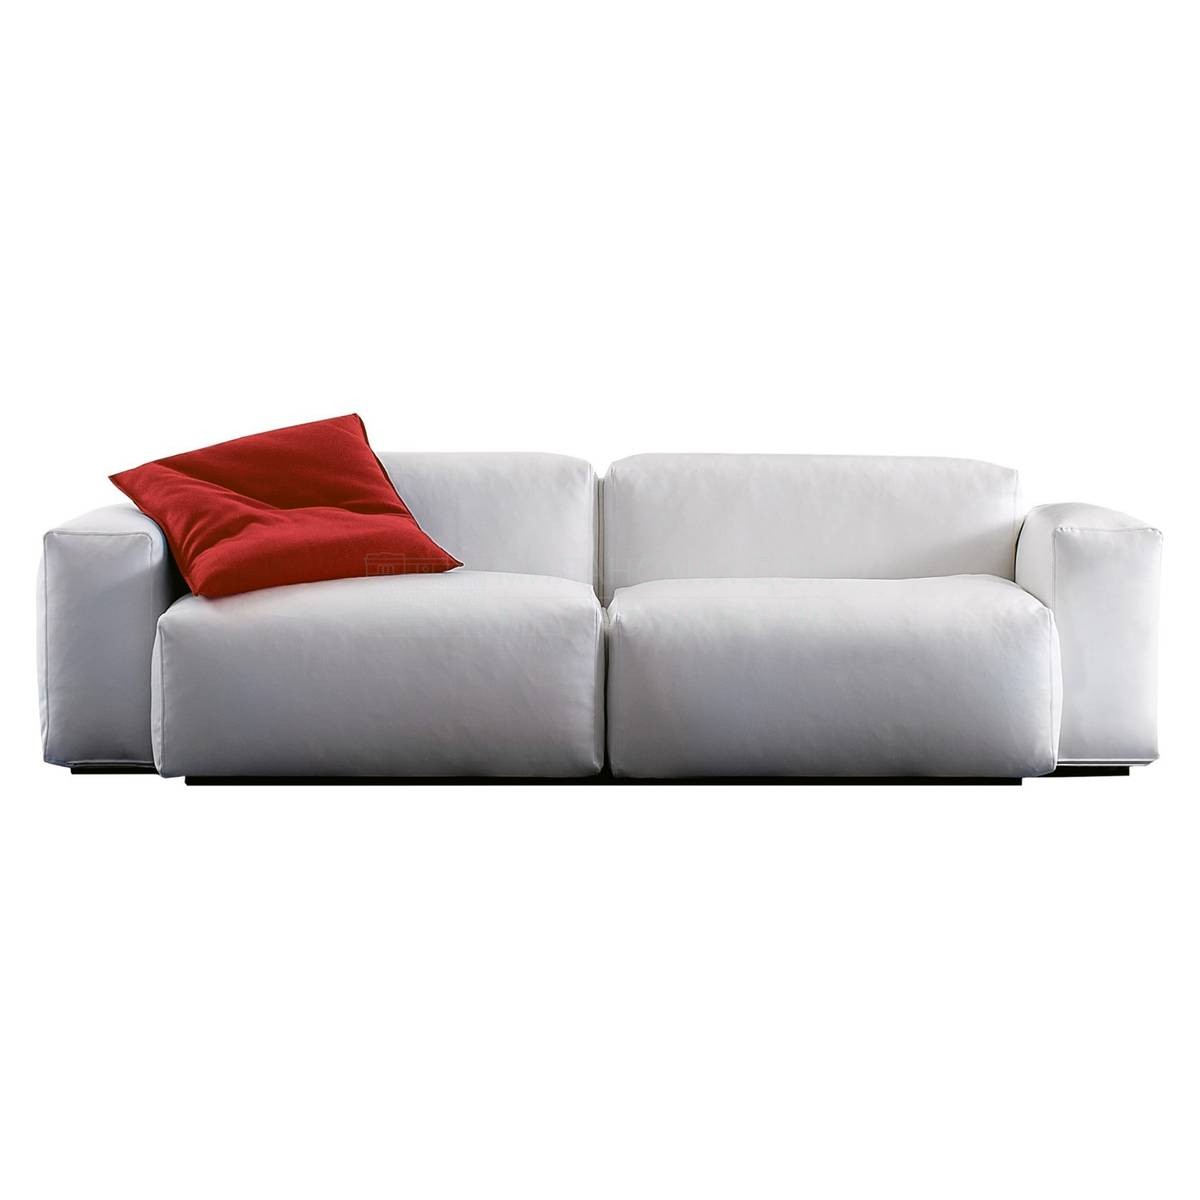 Прямой диван Superoblong/ sofa из Италии фабрики CAPPELLINI